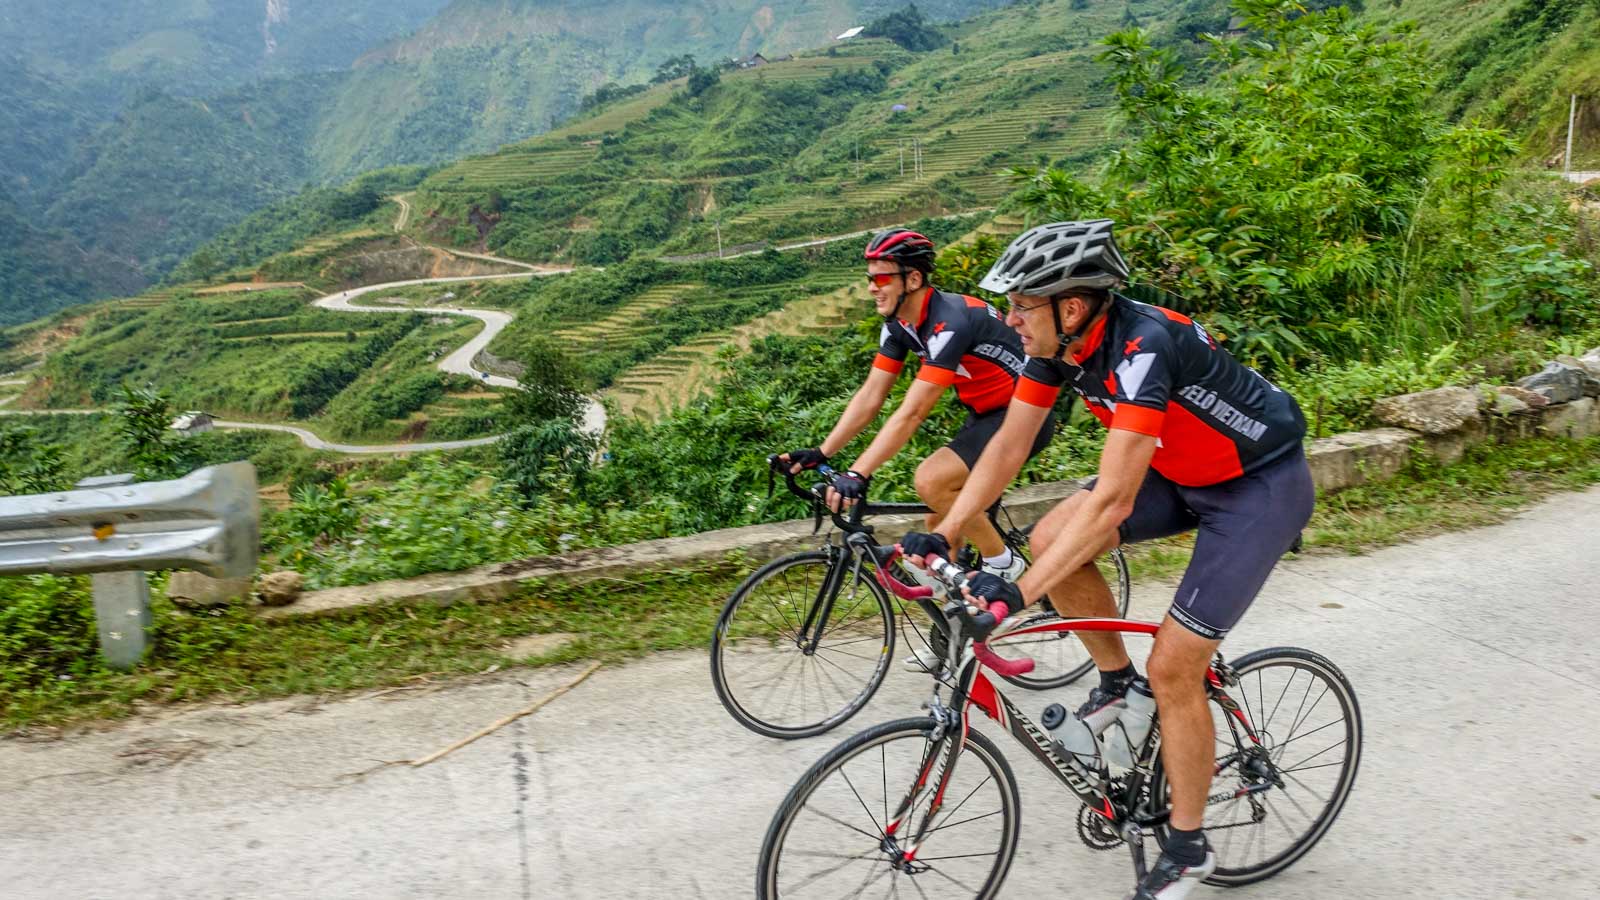 Cyclists riding through mountain pass in Vietnam